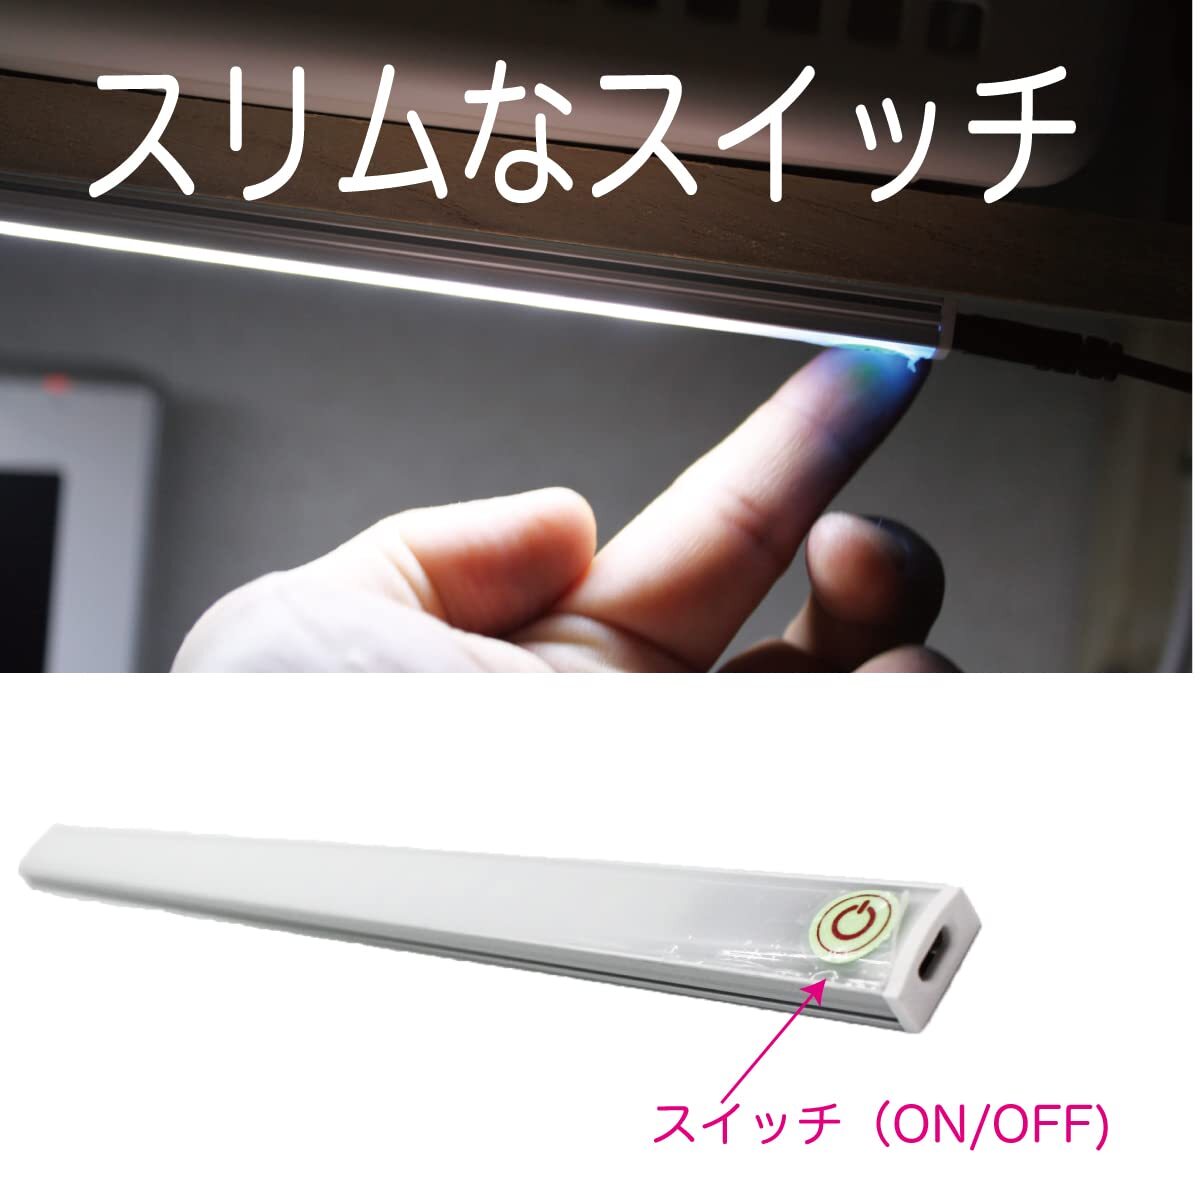 FUJIMORI LED балка свет 30cm тонкий 0.7mm Touch тип переключатель 5V 6W днем белый цвет USB 6000K[ длина вдавлено .] нет уровень style свет metal 